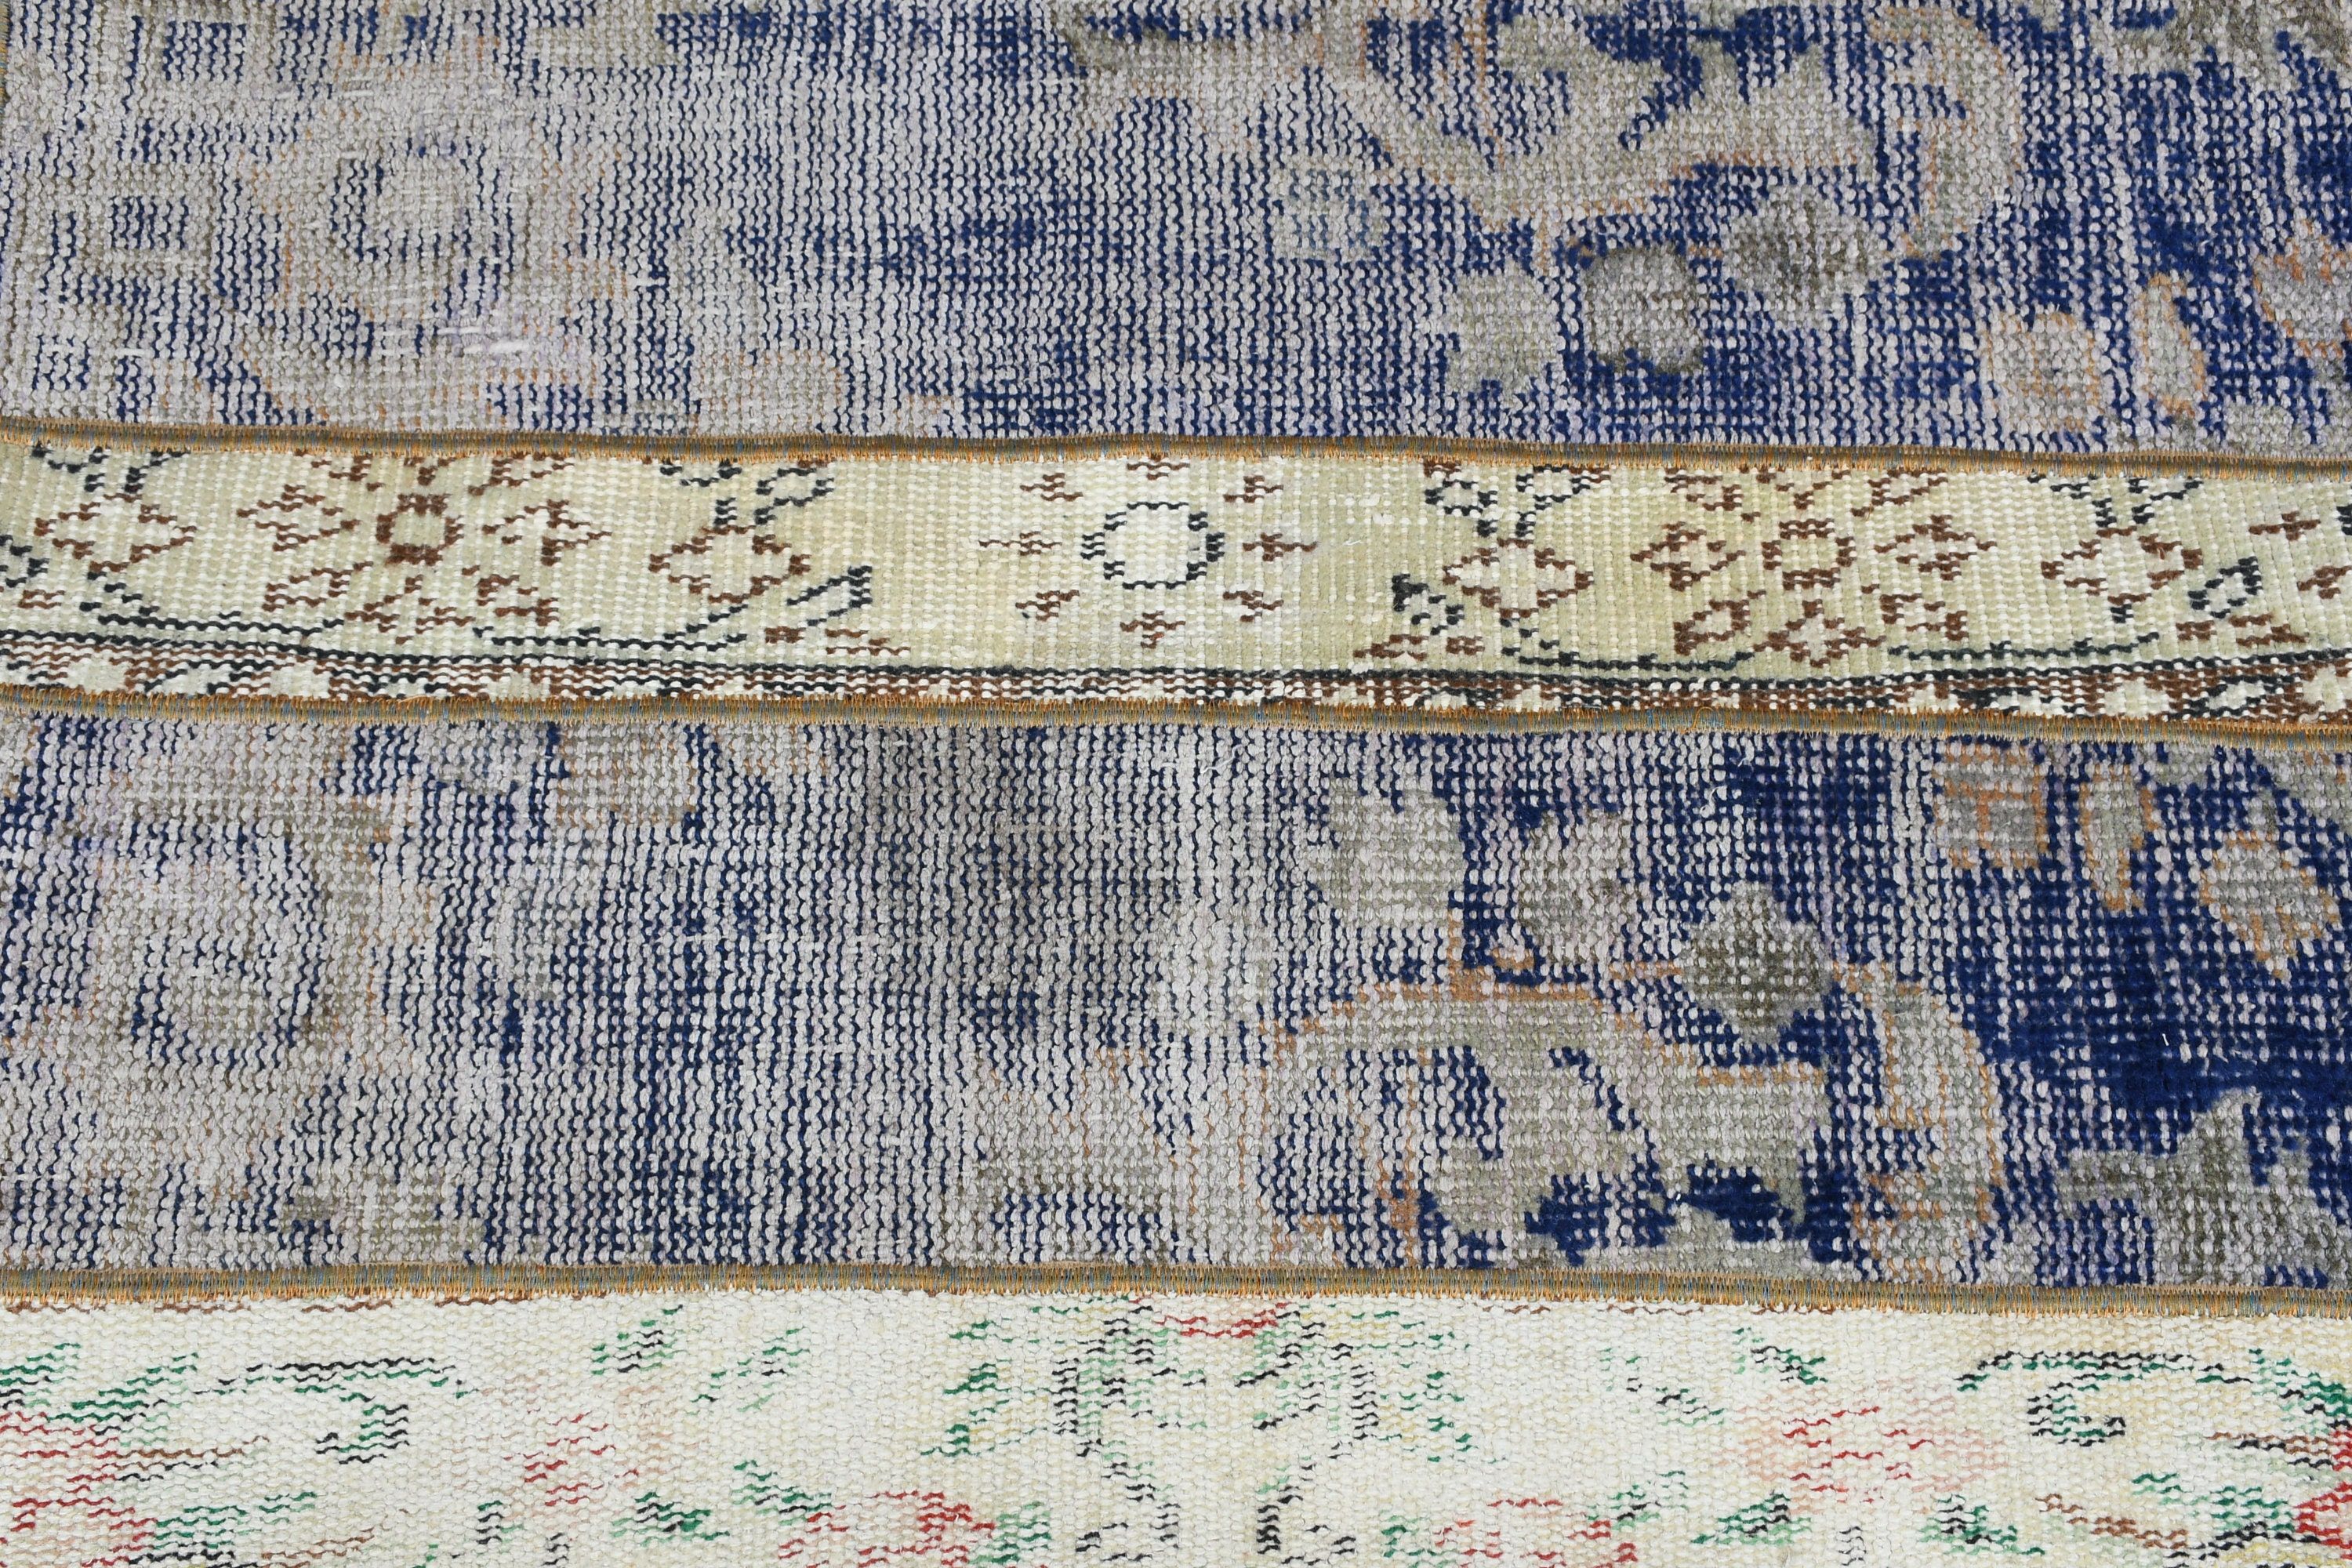 Bath Rug, Vintage Rug, Bedroom Rugs, Antique Rug, Turkish Rug, 2.2x3.3 ft Small Rug, Blue Moroccan Rugs, Entry Rug, Rugs for Nursery